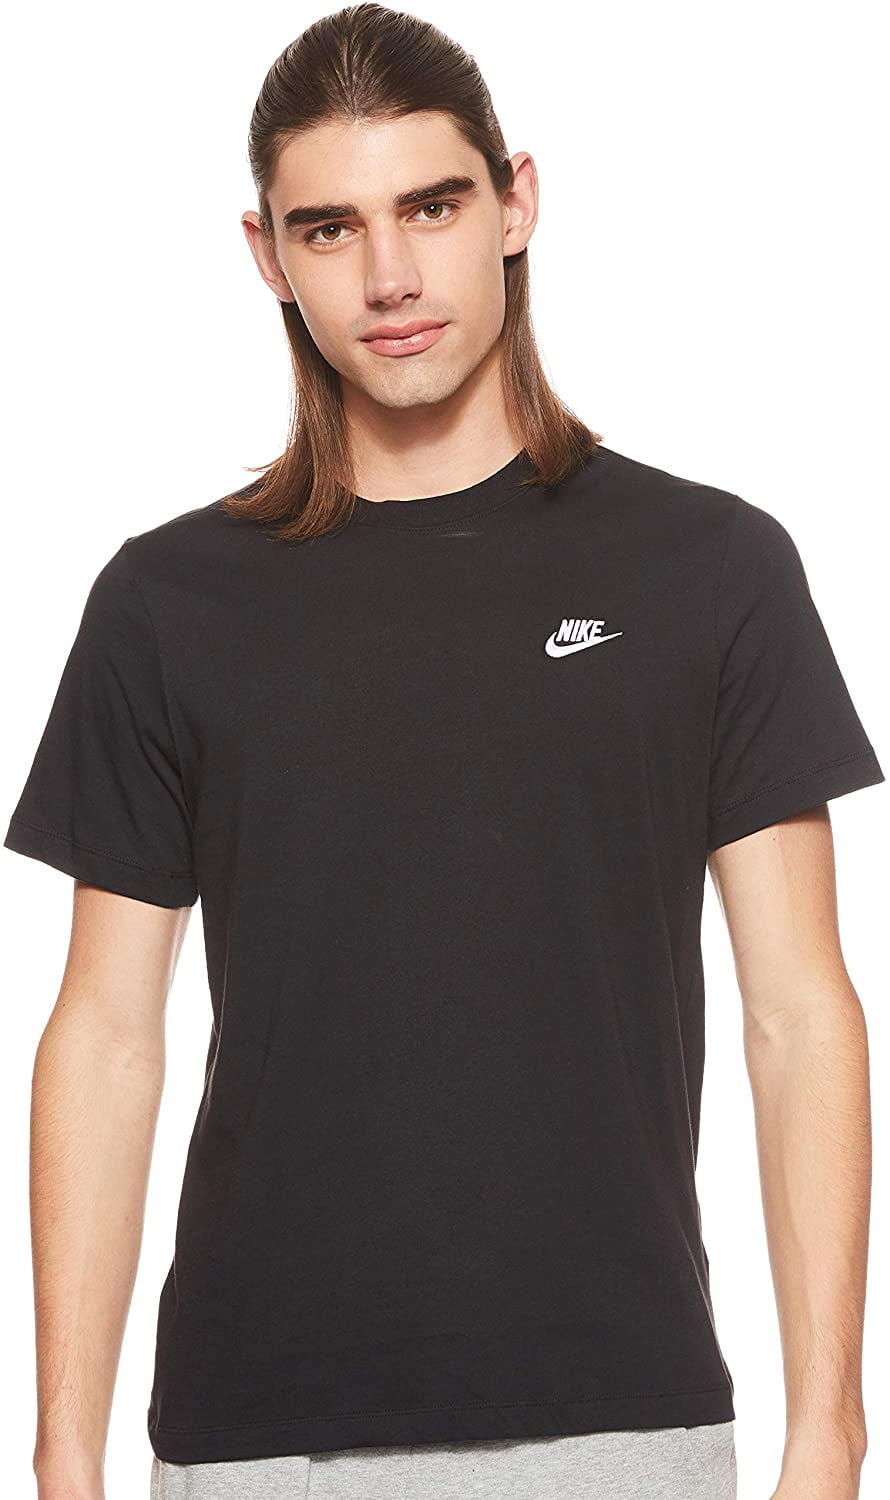 Mens Nike Sportswear Club T-Shirt, Nike Shirt for Men with Classic Fit ...